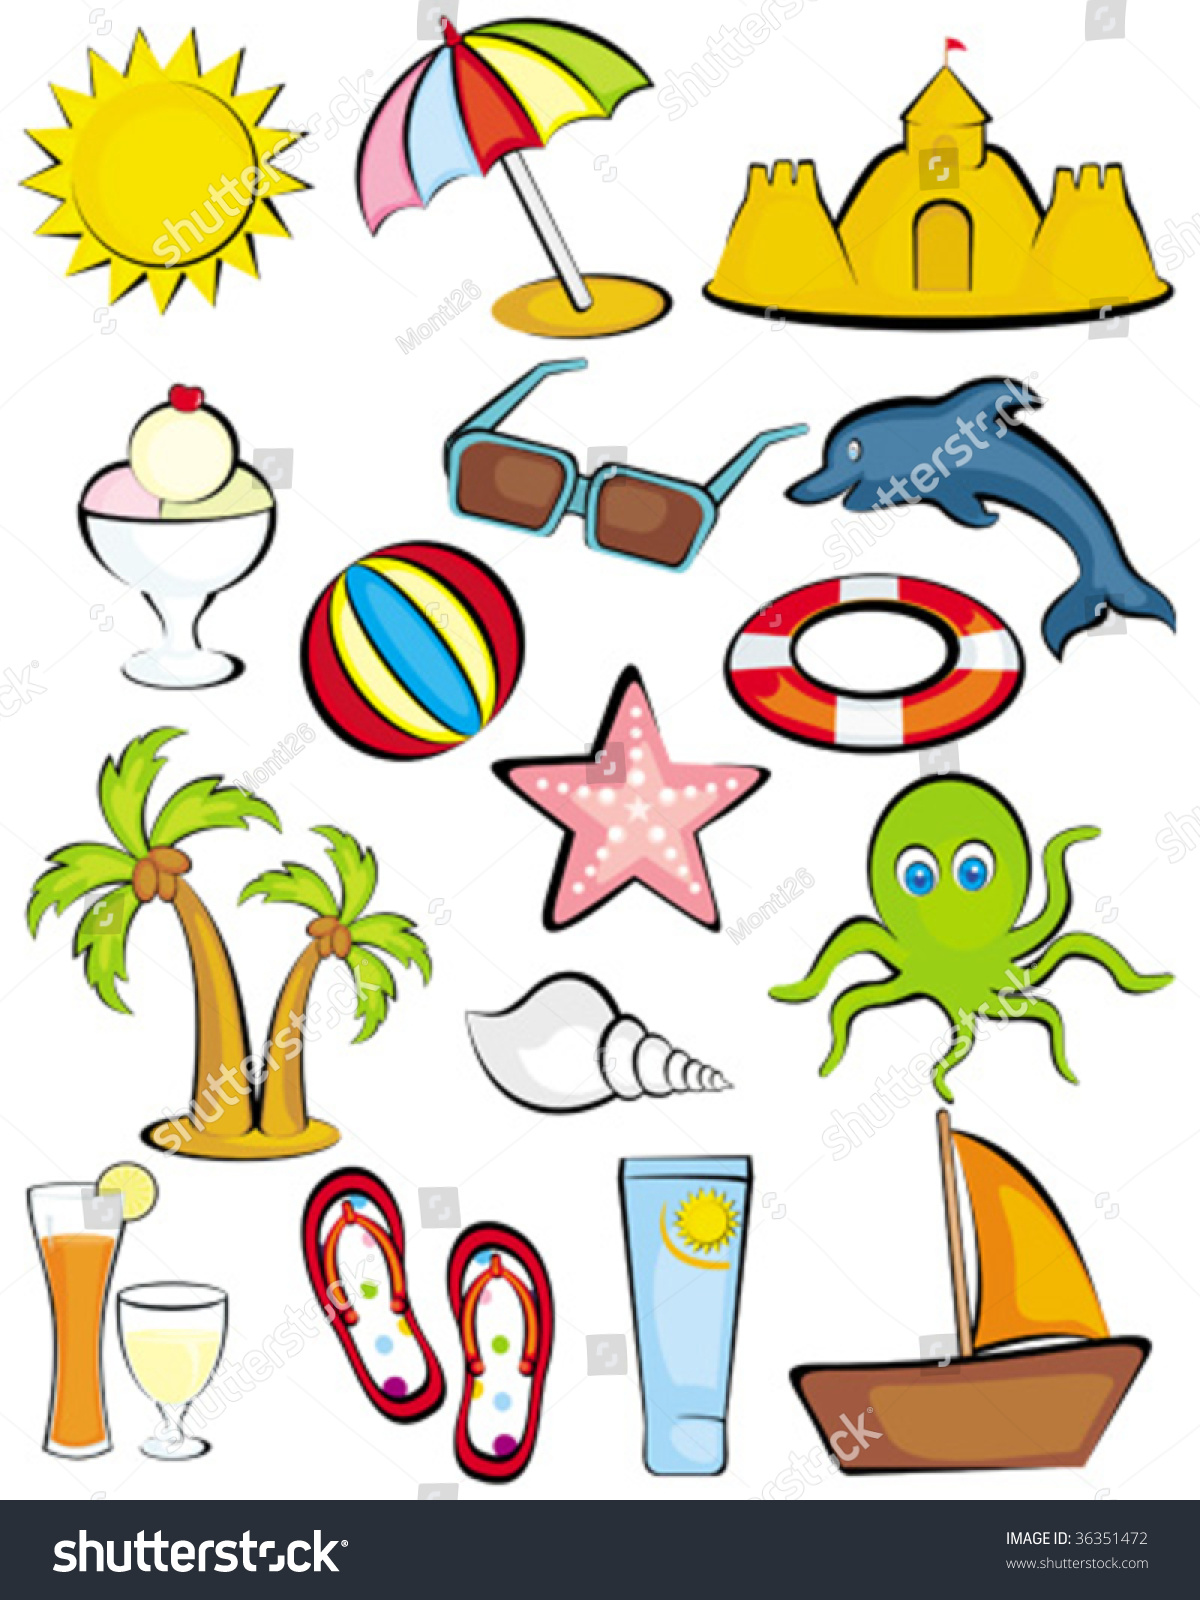 Beach Clipart Icons Stock Vector Illustration 36351472 : Shutterstock